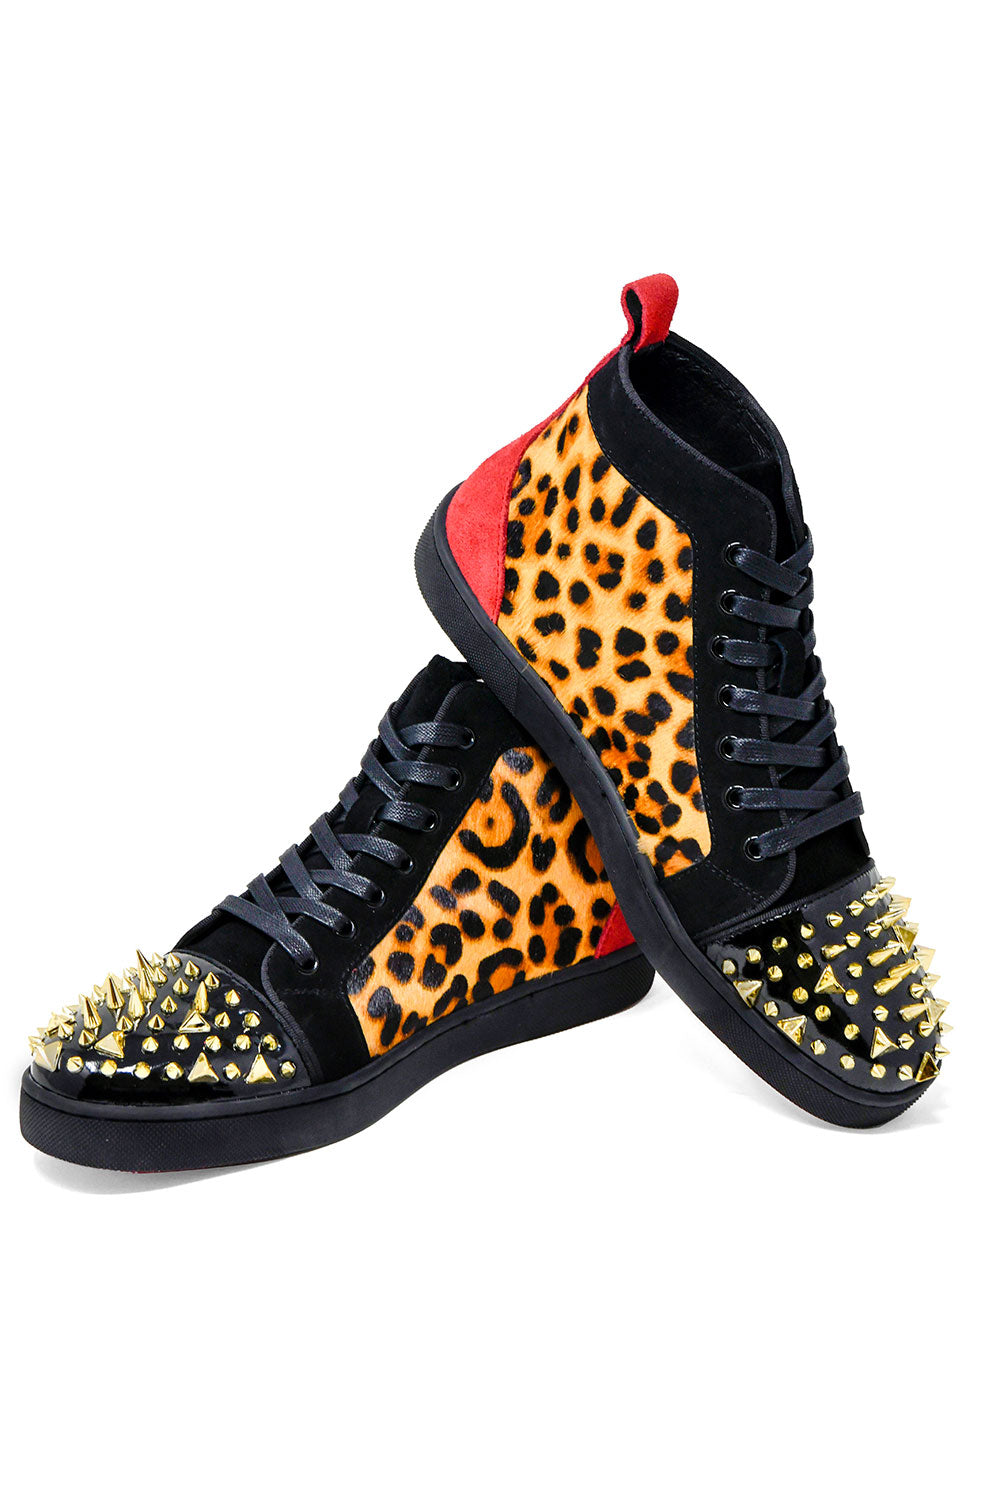 Barabas men's luxury leopard rhinestone spikes high top sneakers SH712